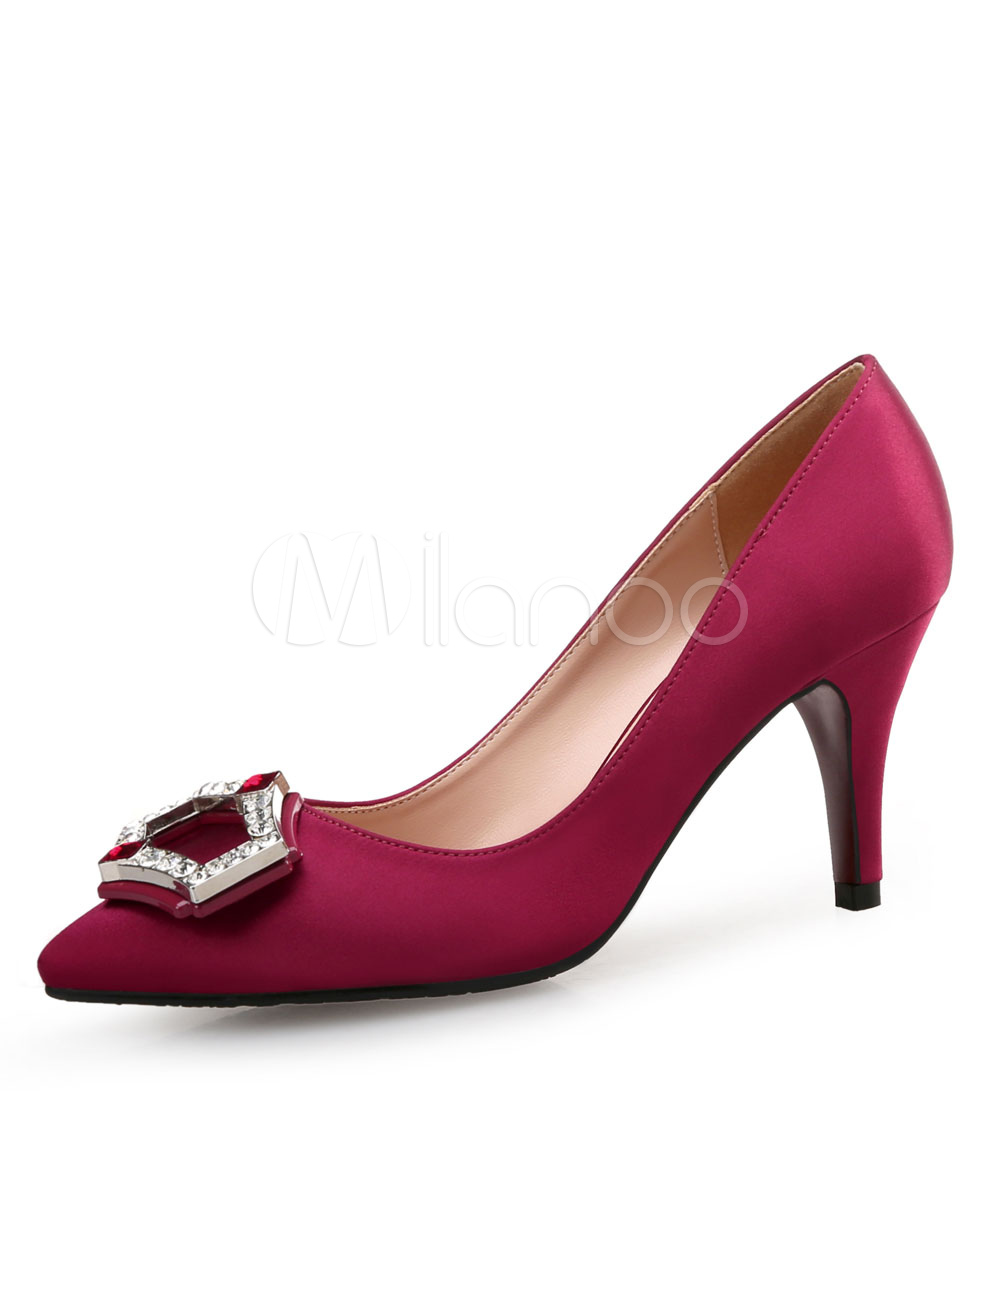 burgundy heels with rhinestones